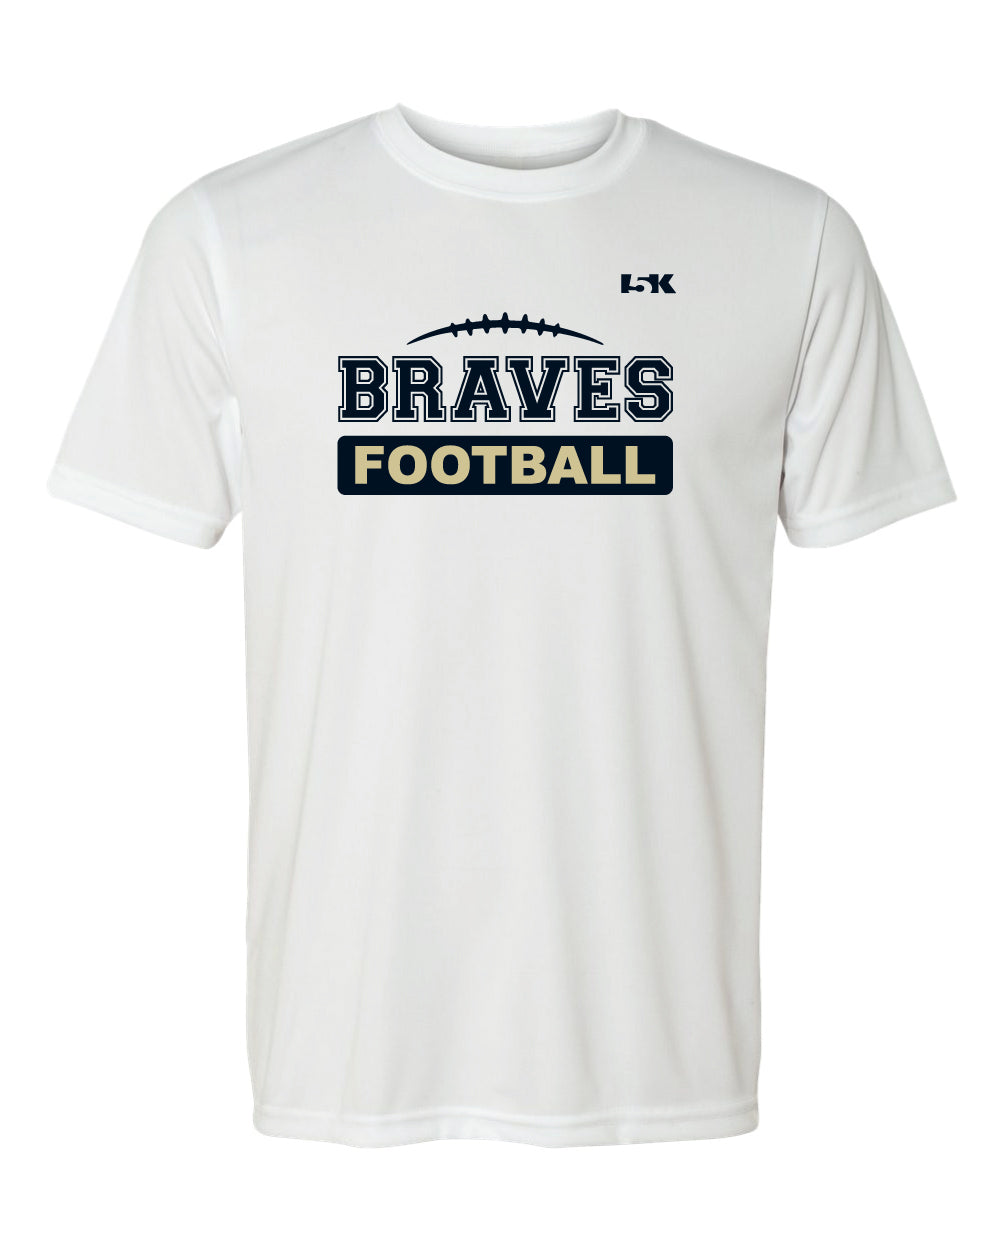 Braves Football Dryfit Performance Shirt Style 1- White - 5KounT2018